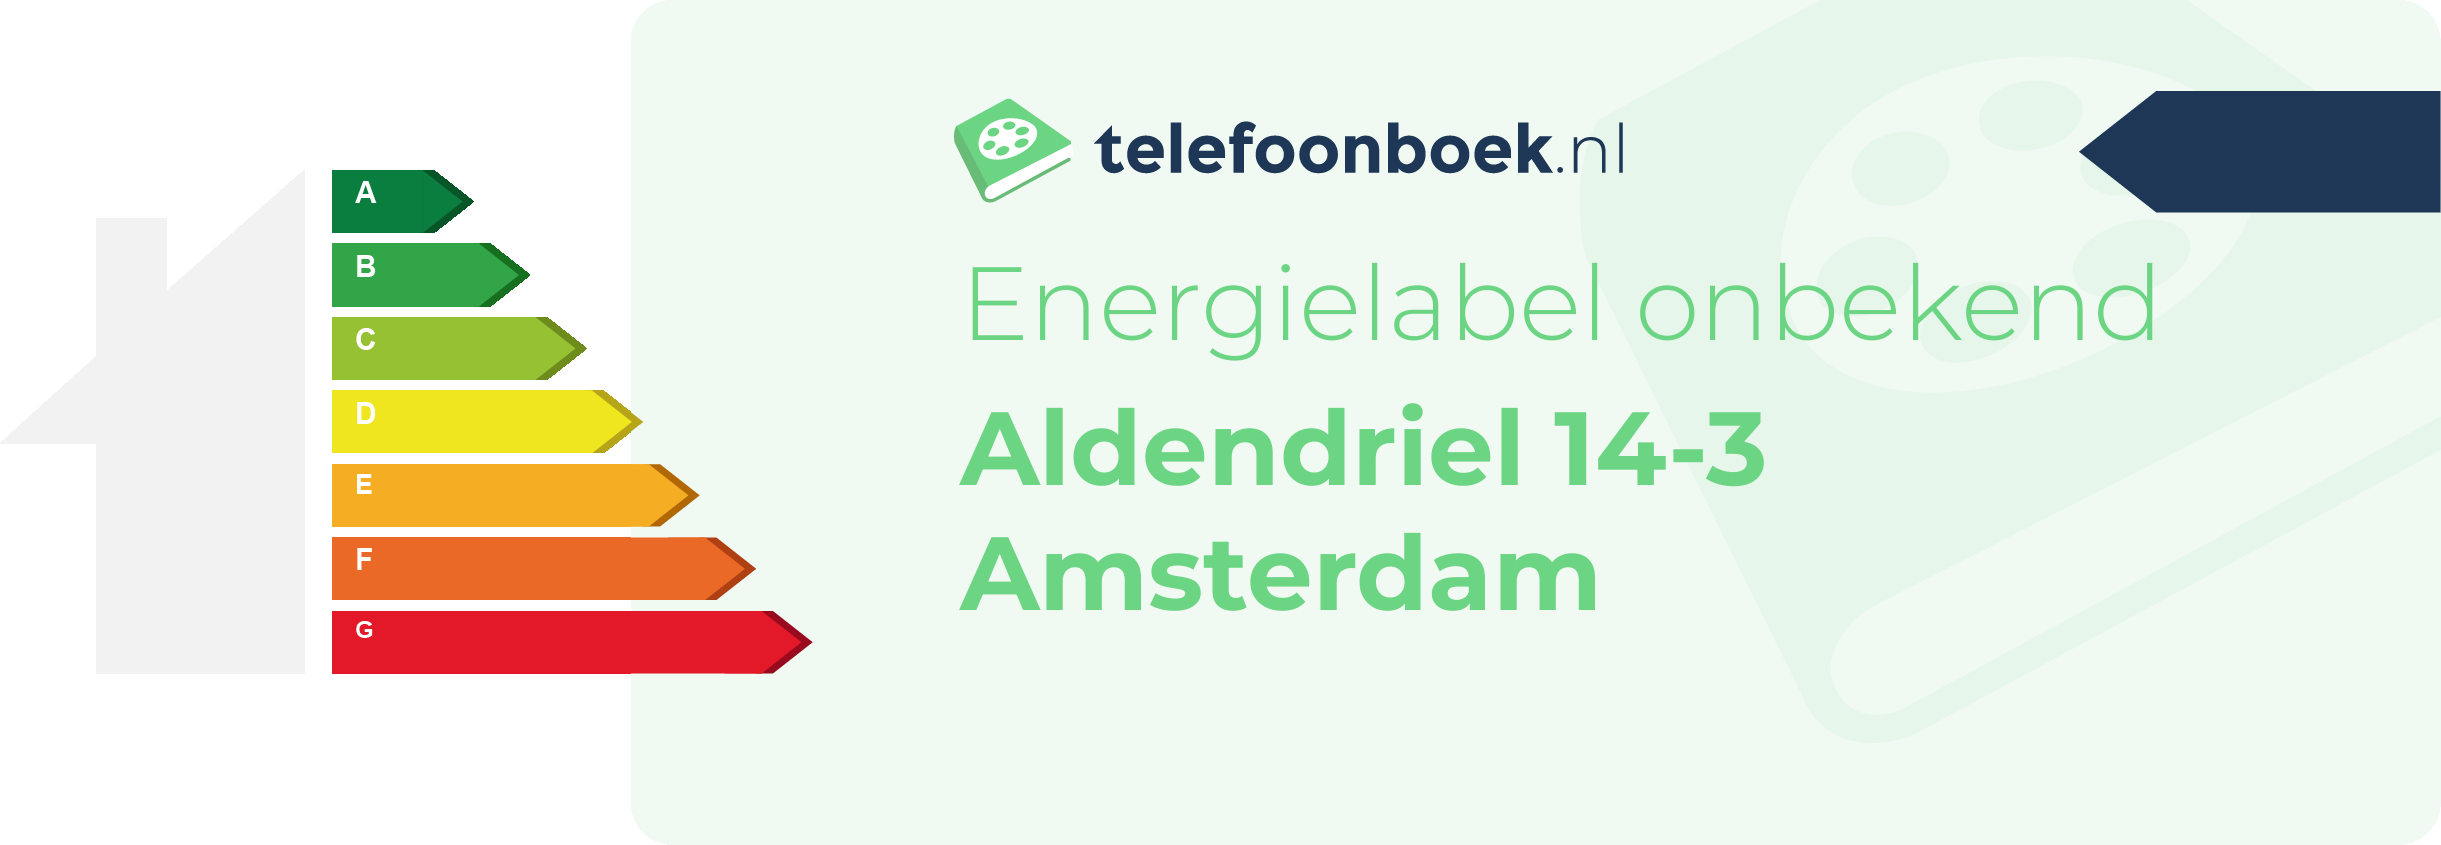 Energielabel Aldendriel 14-3 Amsterdam